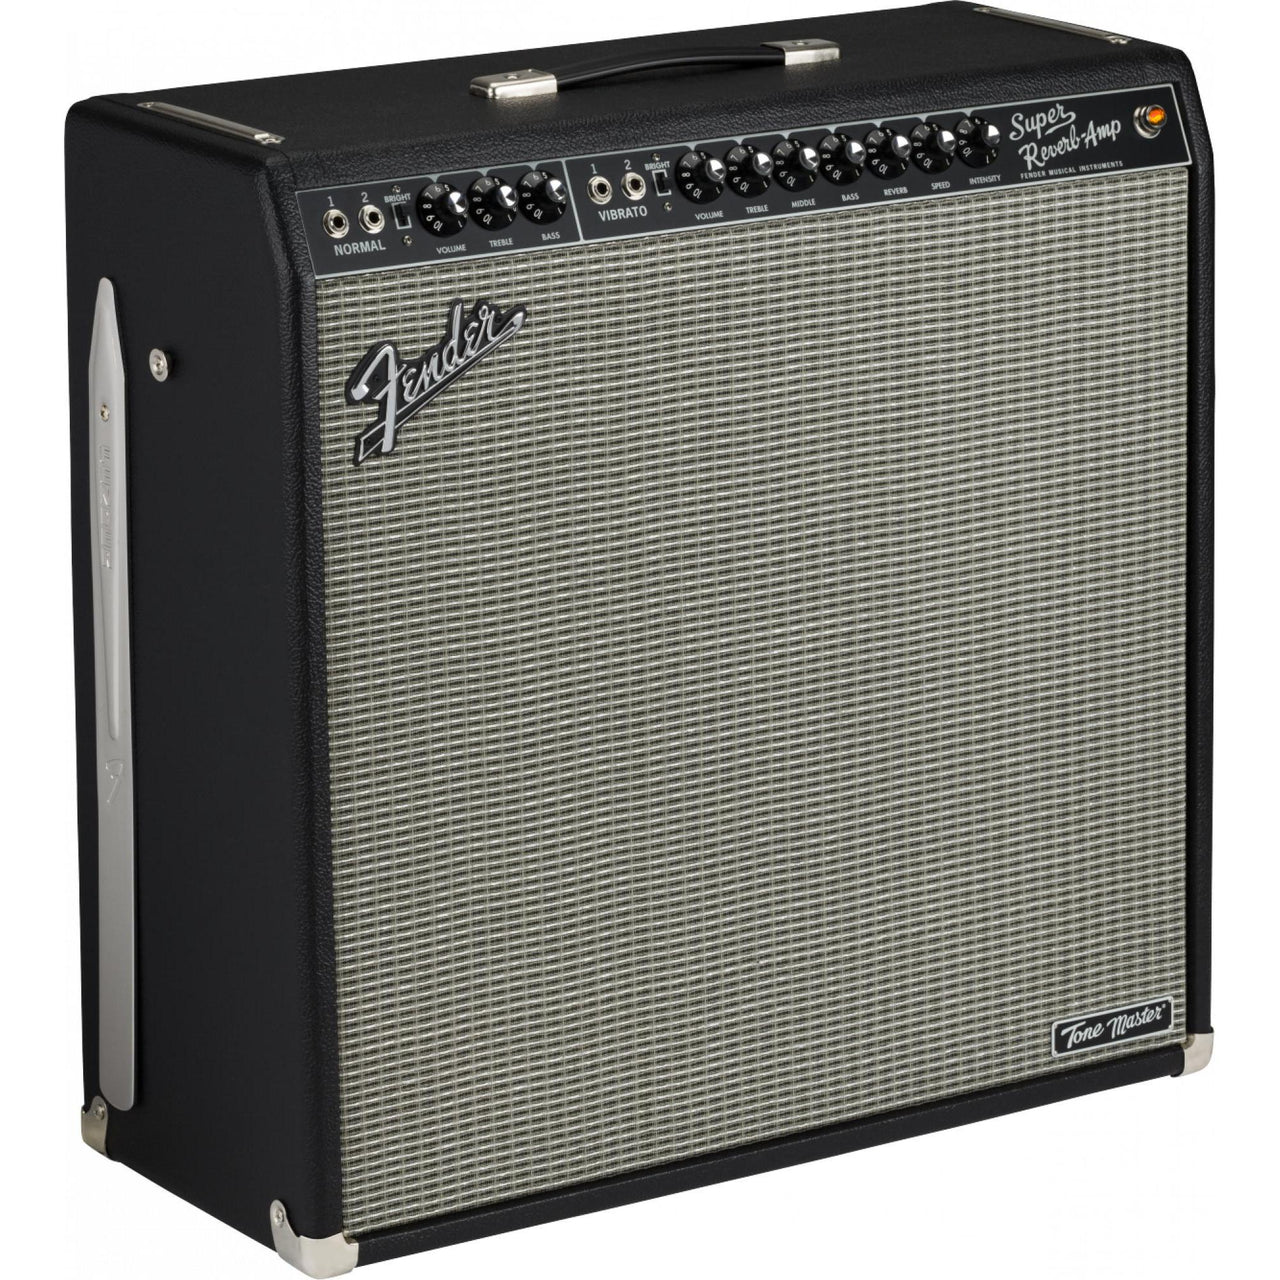 Amplificador Fender Tone Master Super Reverb 120v 2274300000